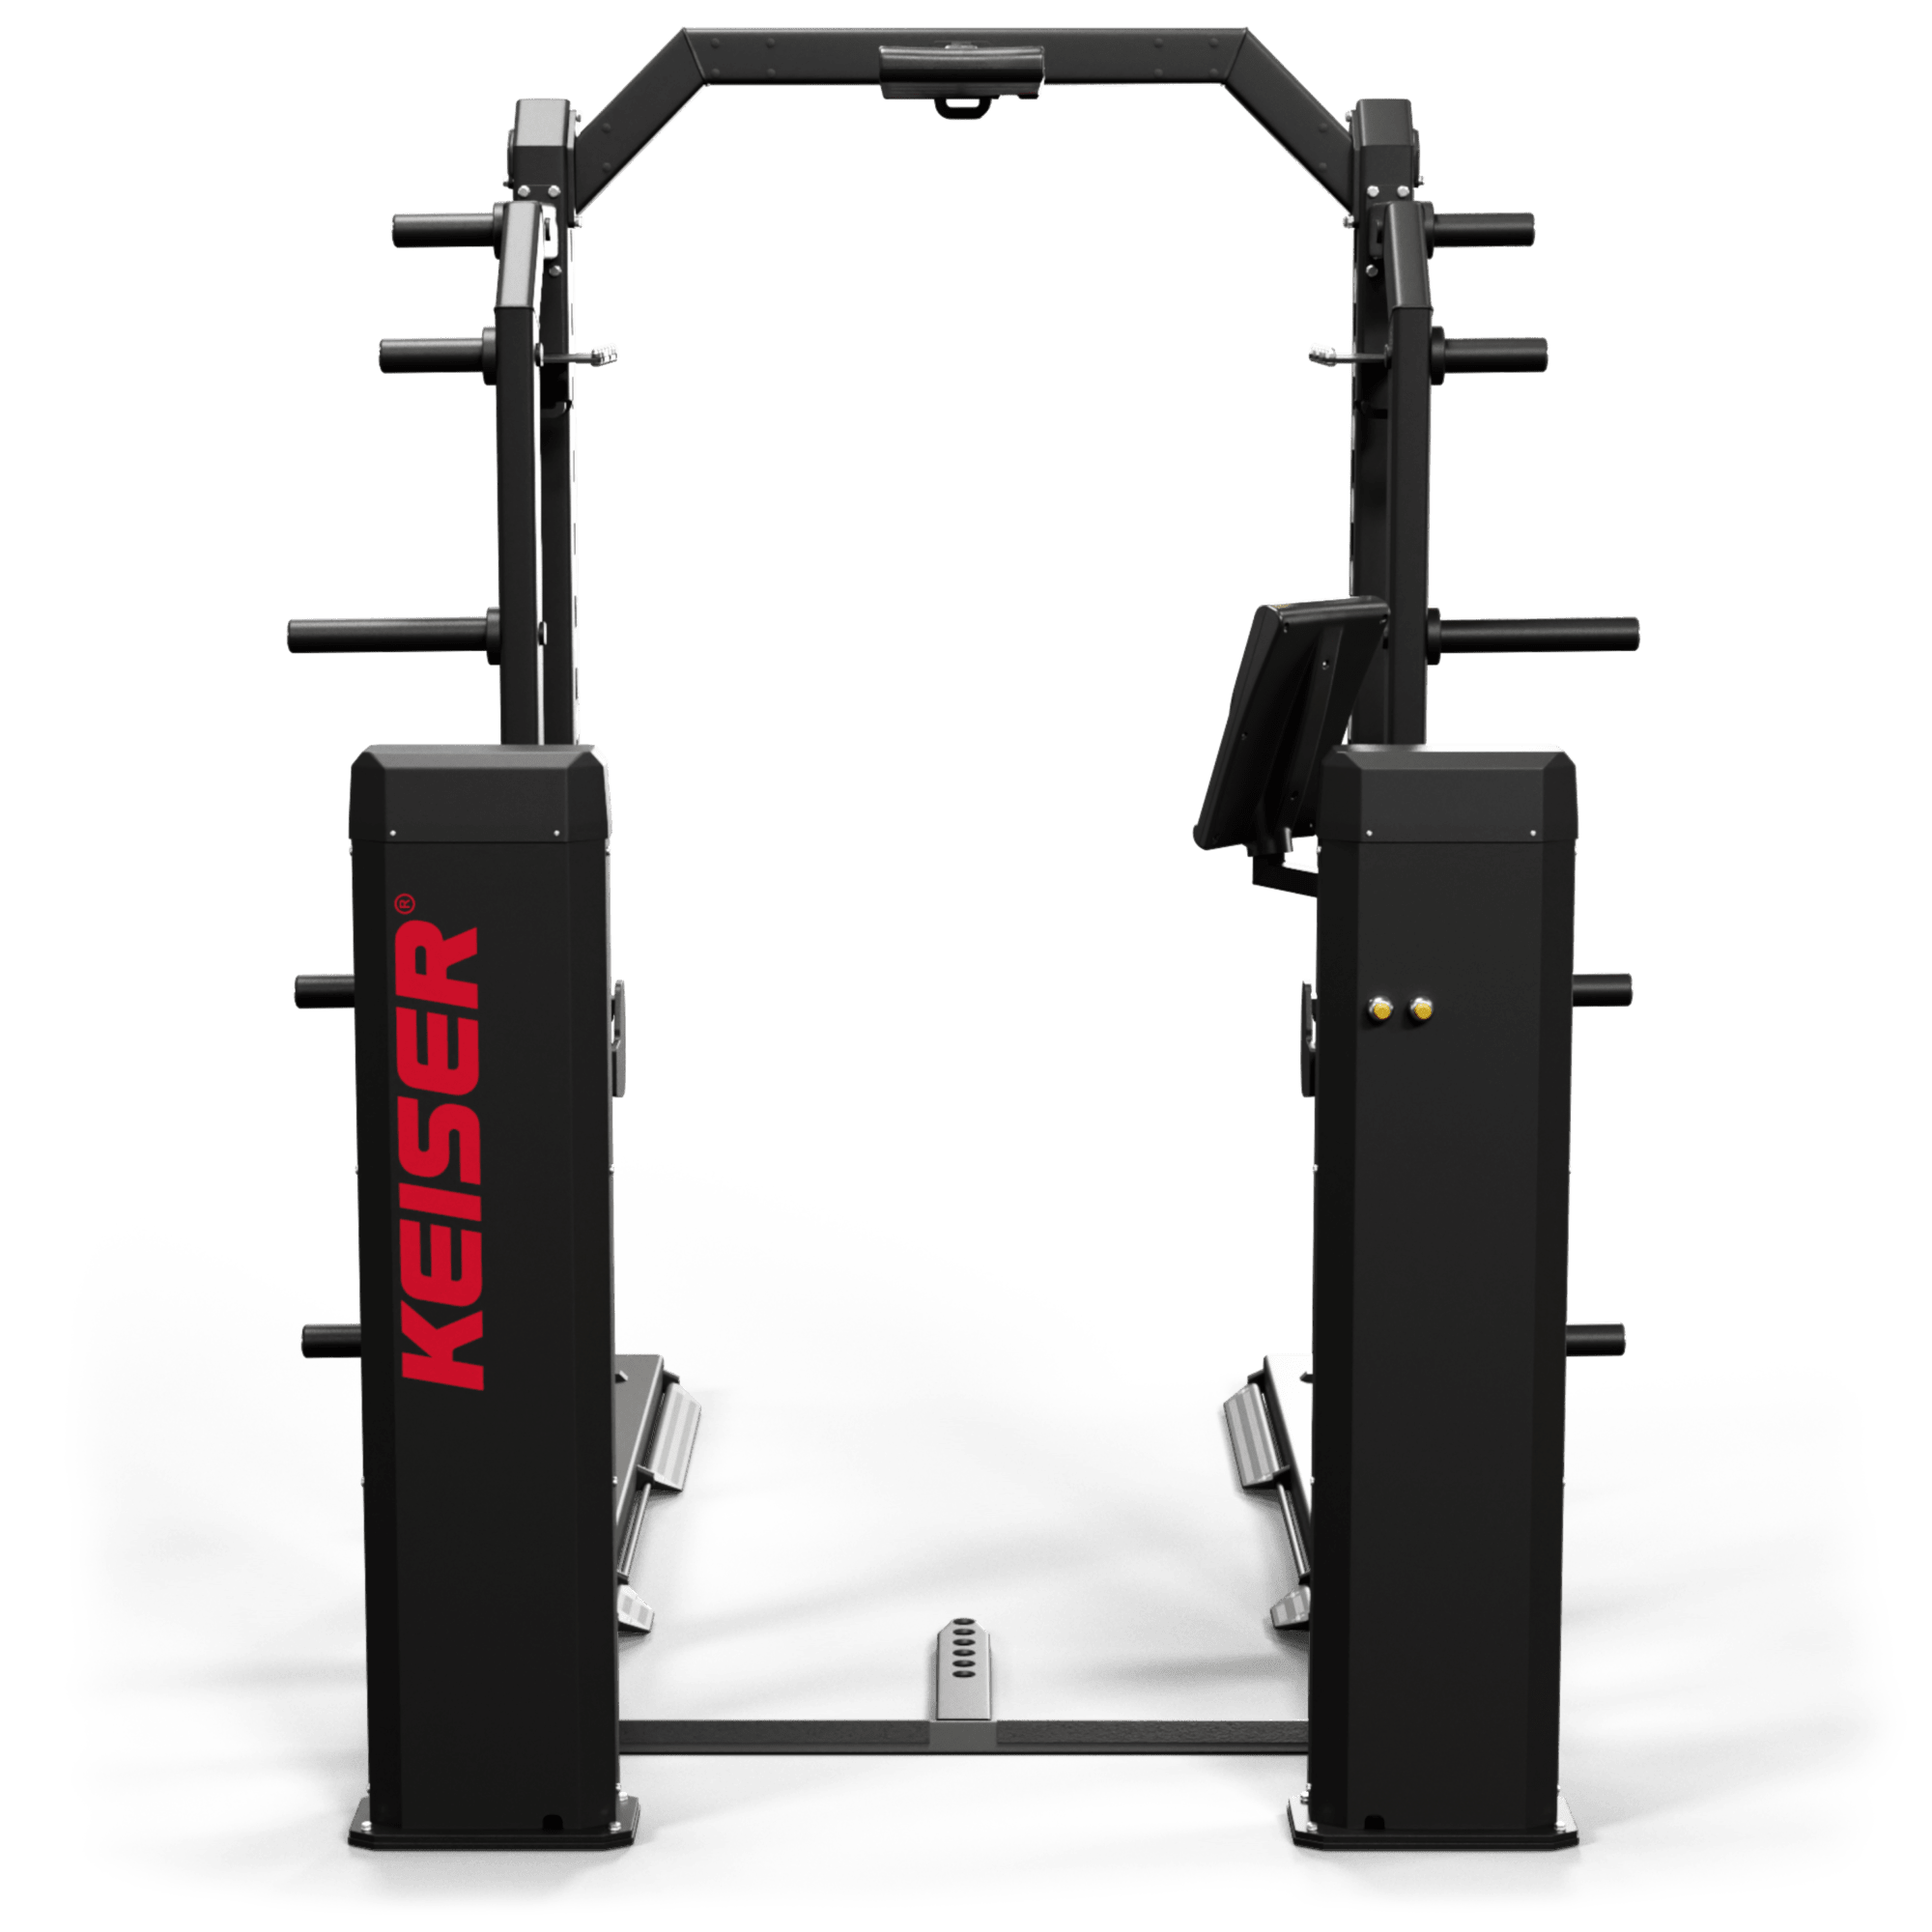 Keiser 8' Half Rack Long Base avec foot pedals - Power Display